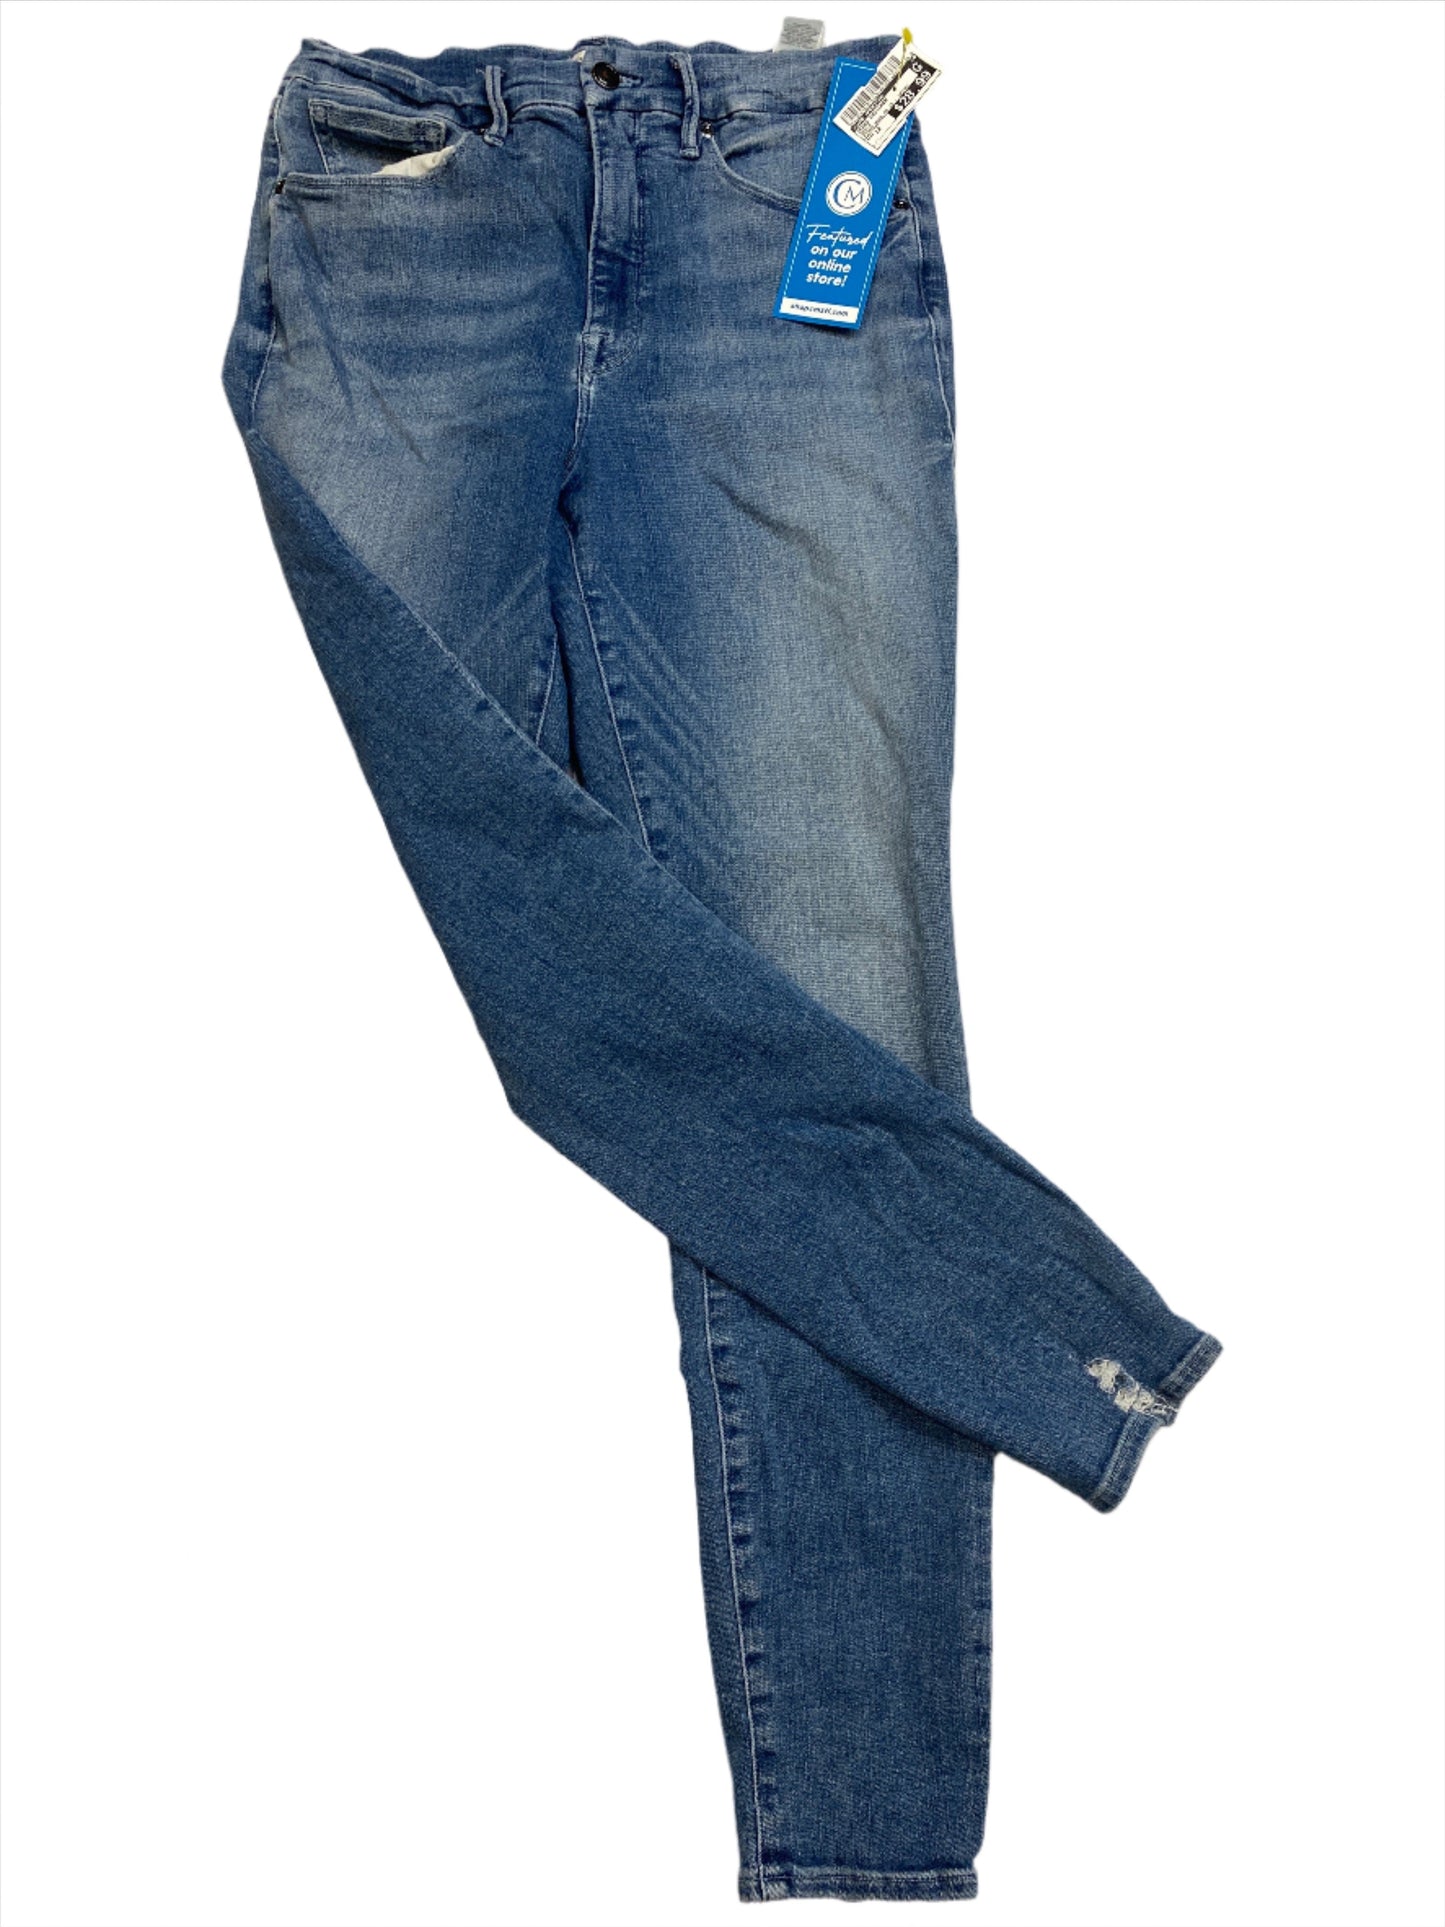 Denim Jeans Designer Good American, Size 12